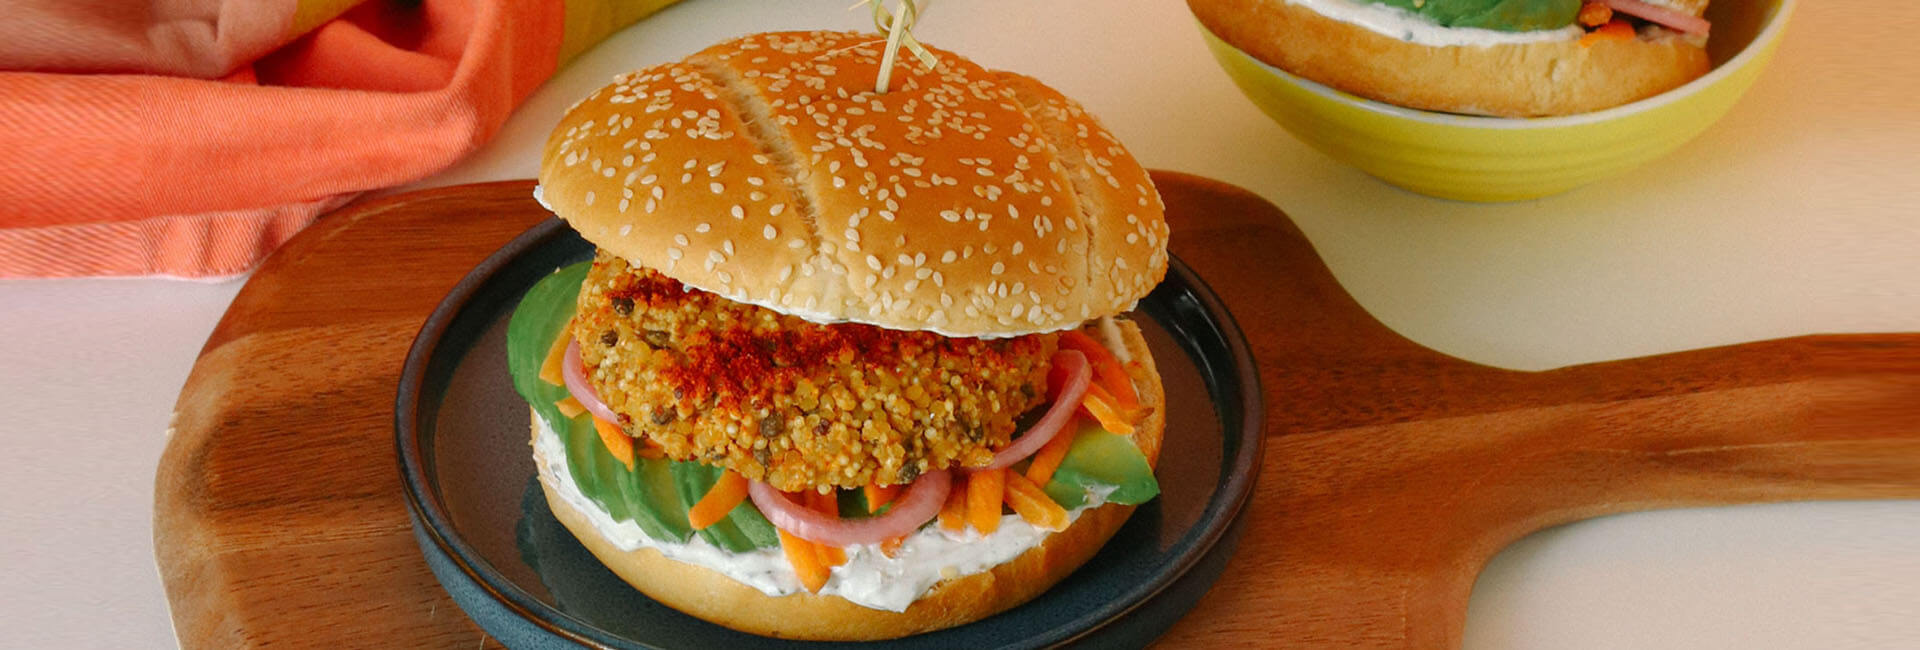 Burger vegetarien au Quinoa lentilles